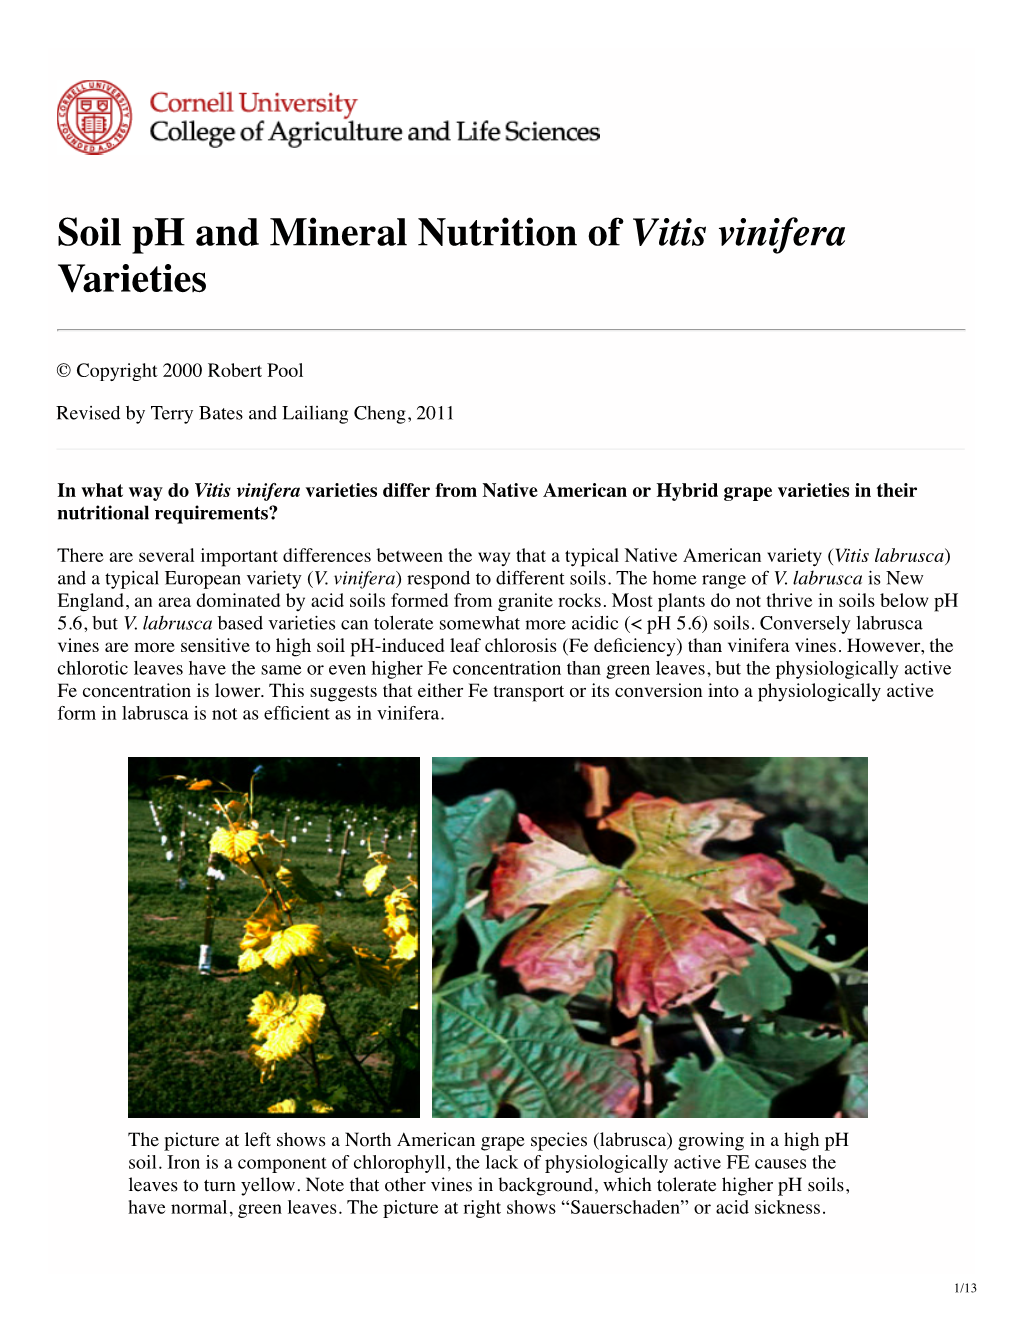 Soil Ph and Mineral Nutrition of Vitis Vinifera Varieties